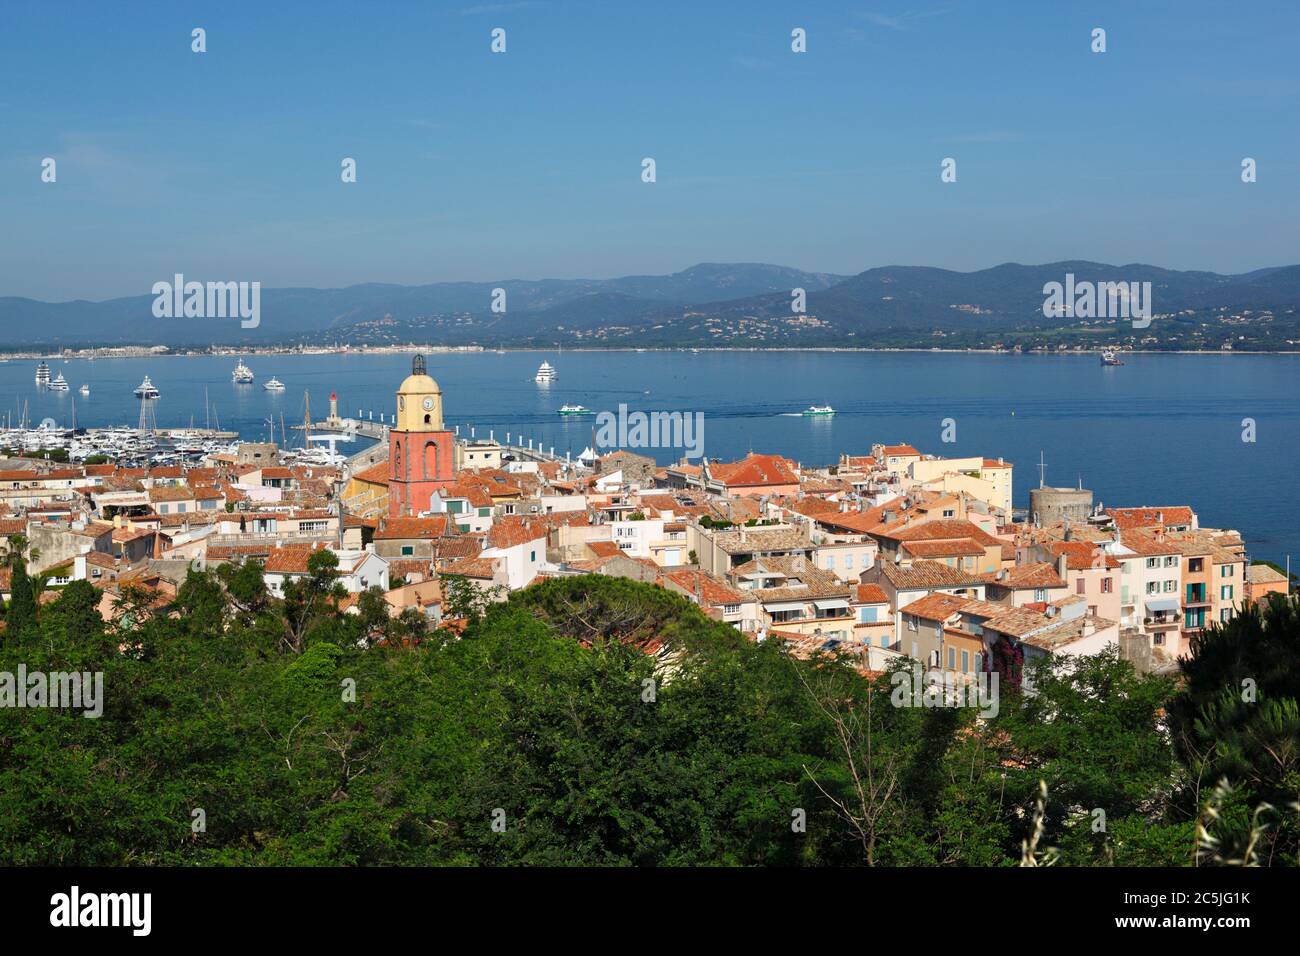 View over old town, Saint-Tropez, Var, Provence-Alpes-Cote d'Azur, France, Europe Stock Photo